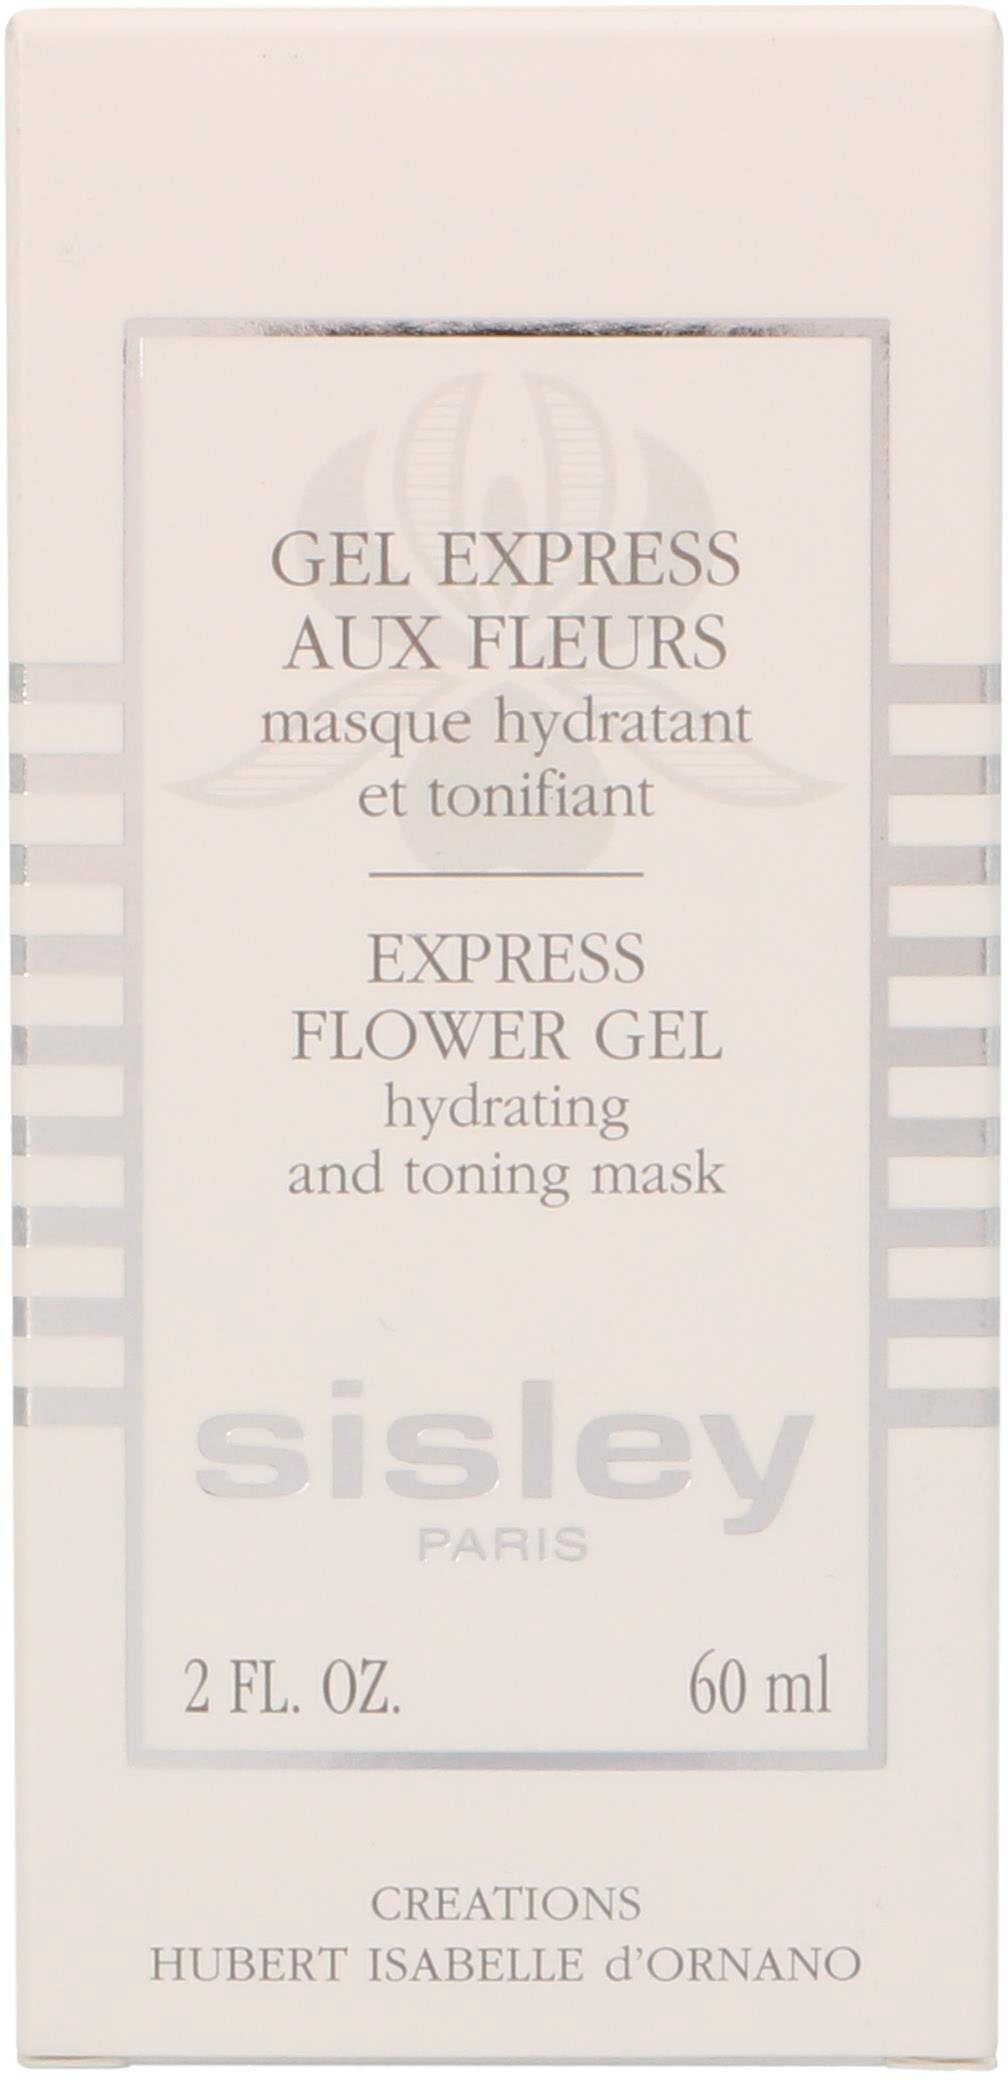 sisley Gesichtsgel Flower Gel Express